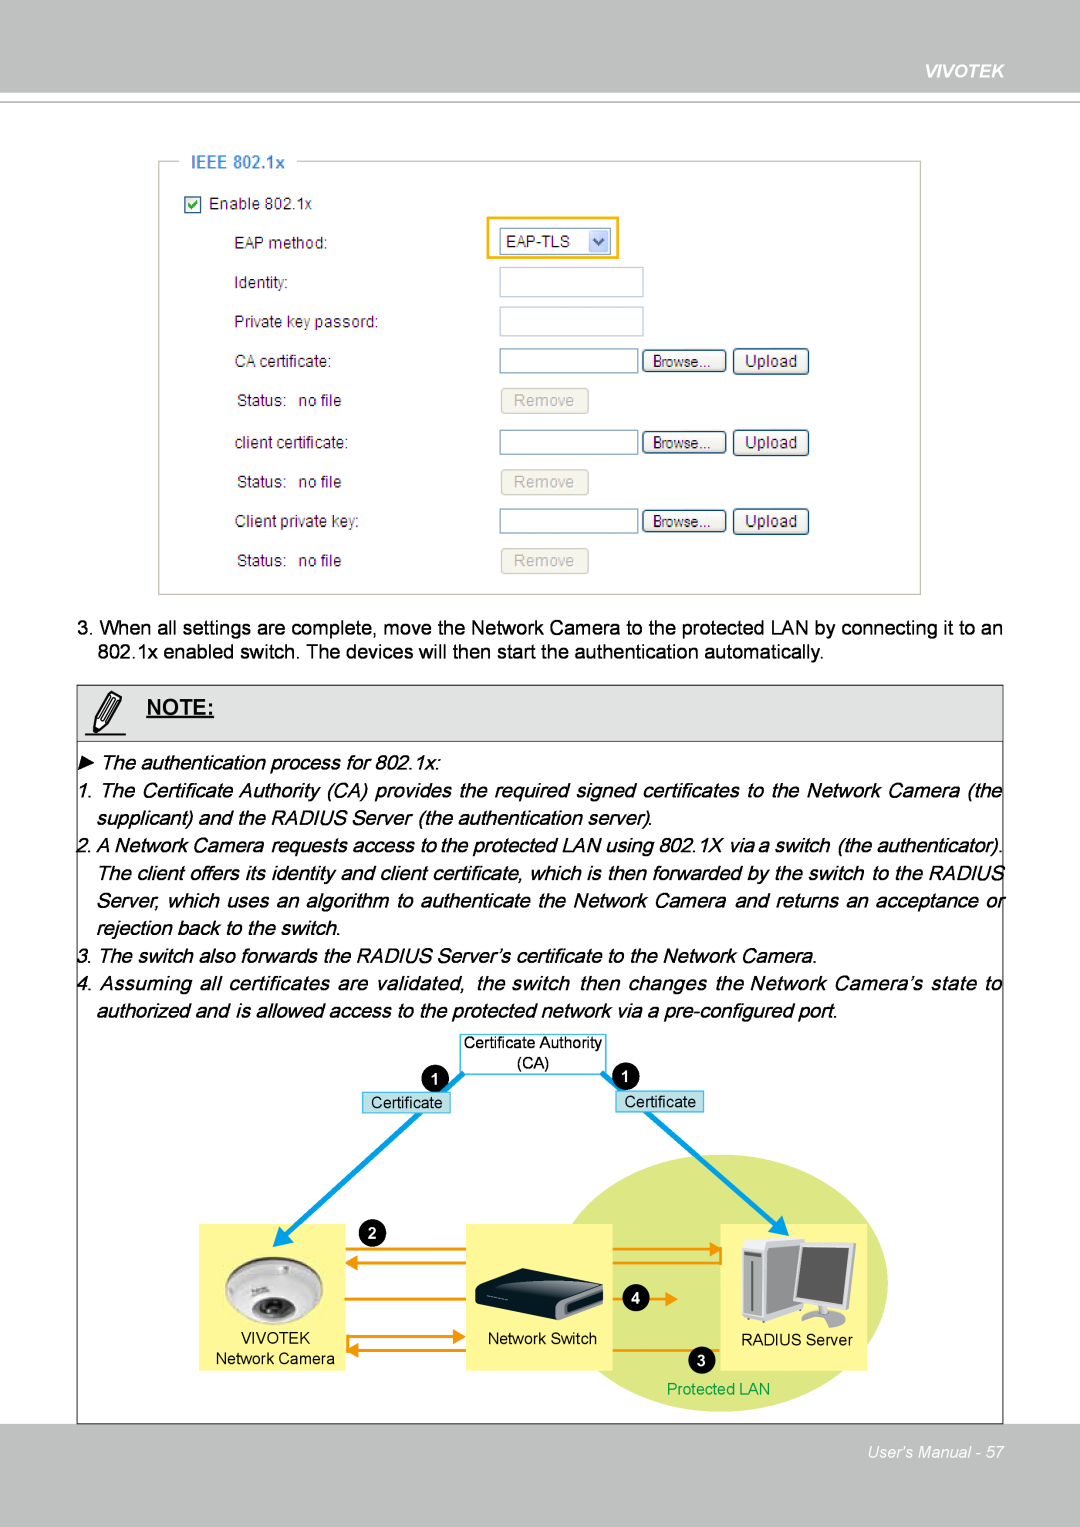 Vivotek FE8171V manual The authentication process for 